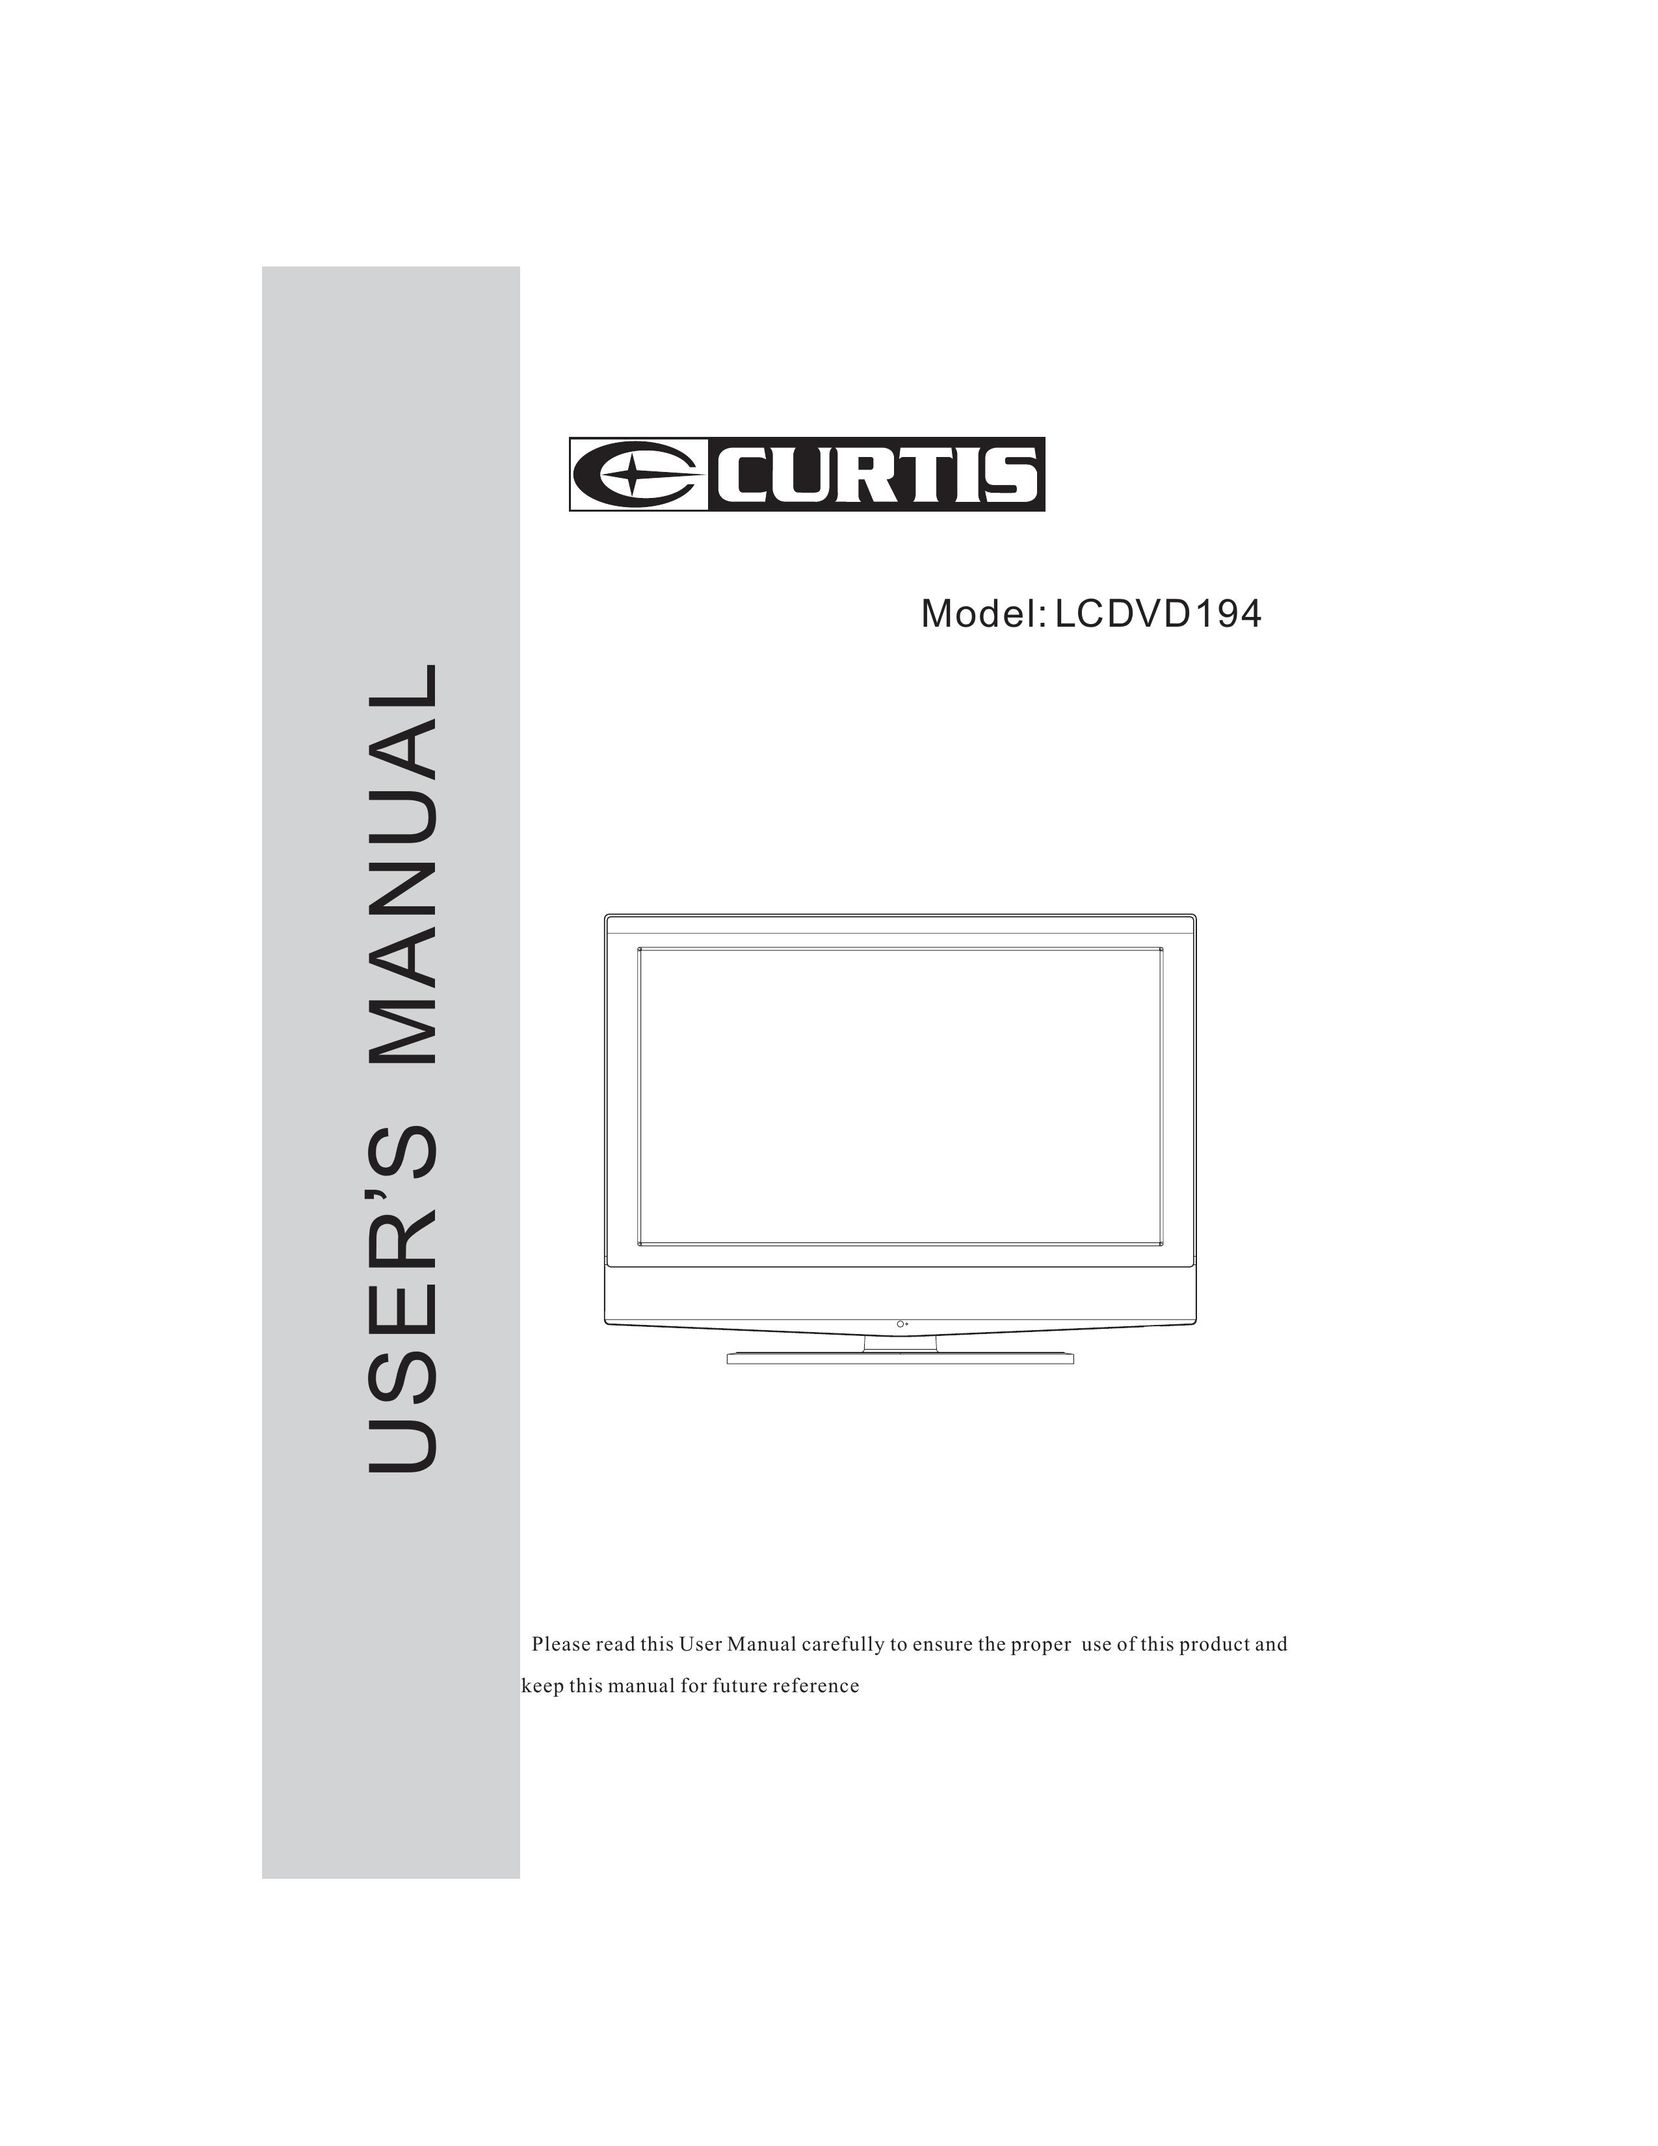 Curtis LCDVD194 Flat Panel Television User Manual